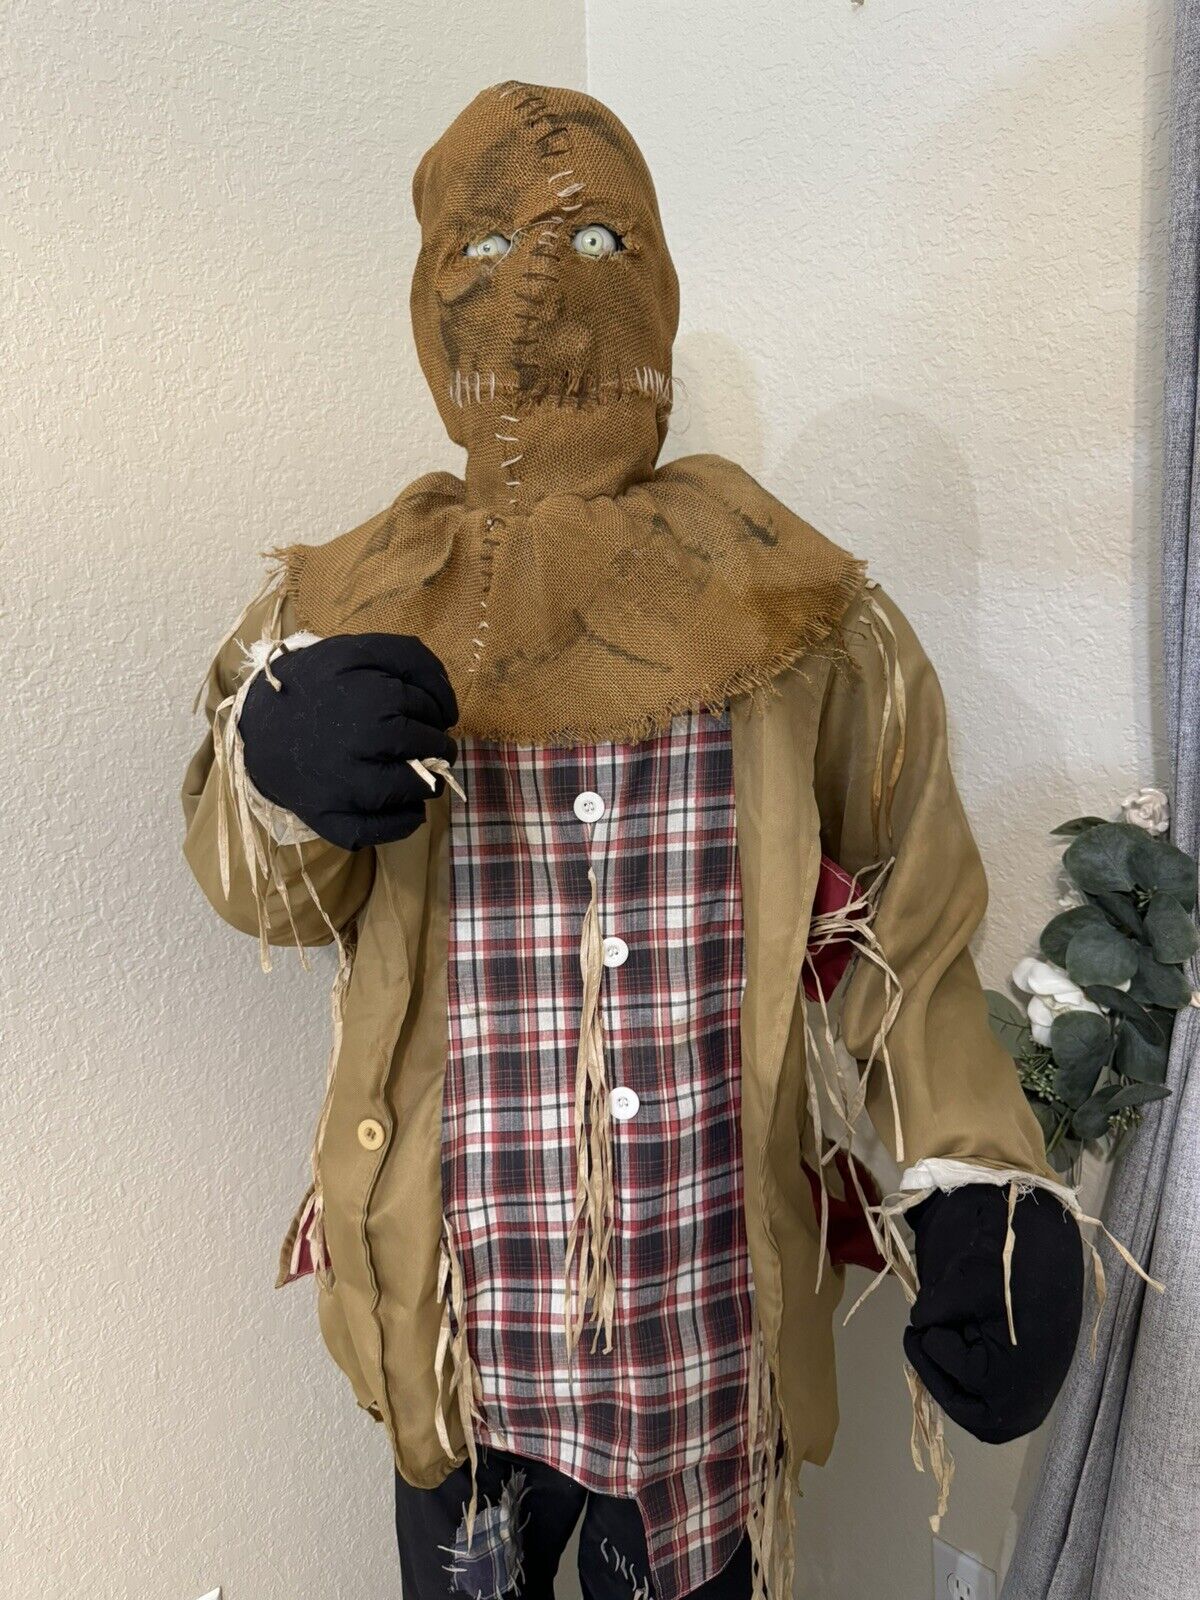 Spirit Halloween Gemmy Animatronic LIFE SIZE Harvester Scarecrow RARE- TESTED